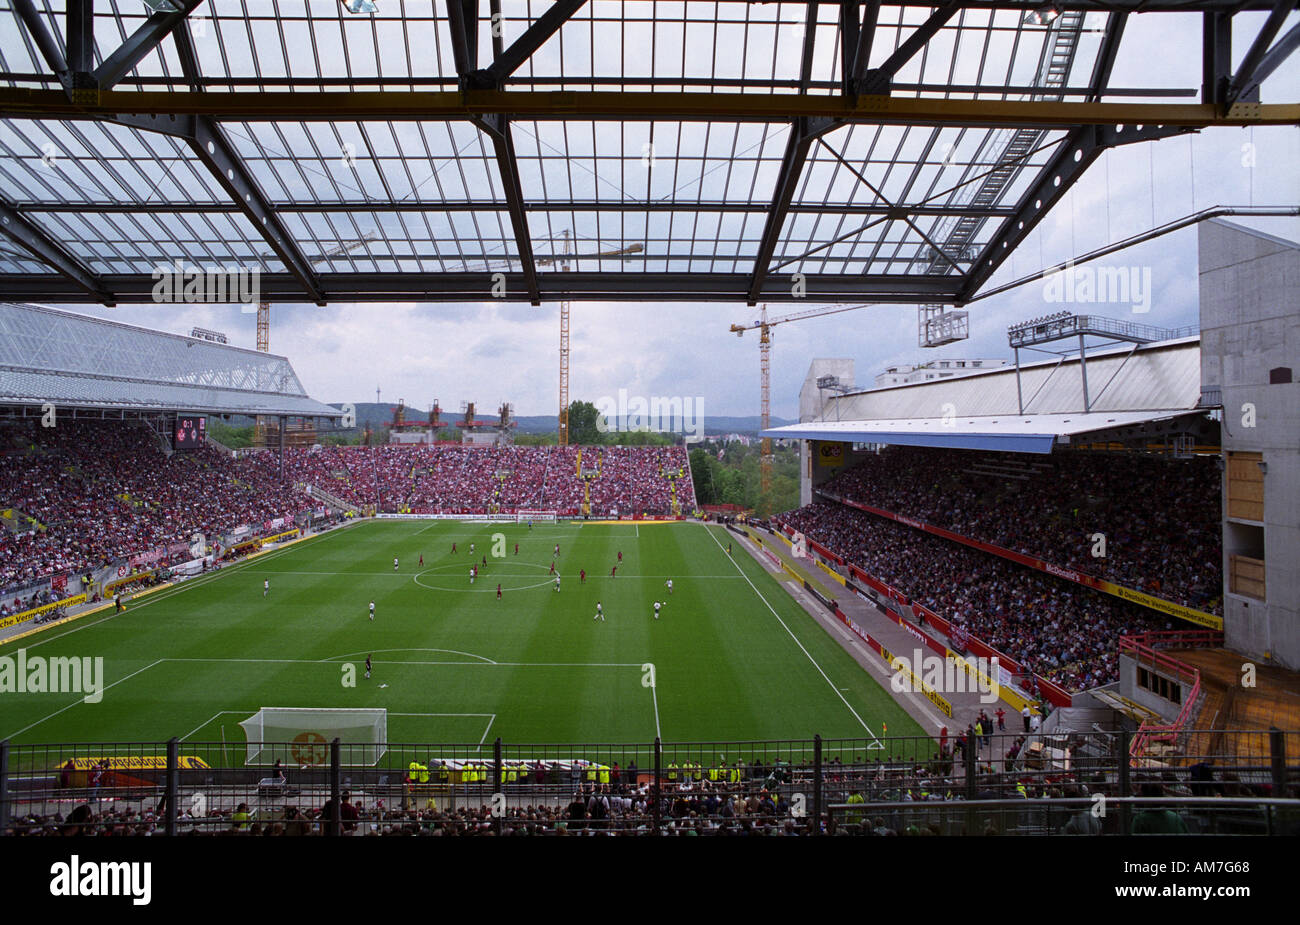 Fritz Walter Stadion, home of Kaiserslautern football club im Germany. Stock Photo